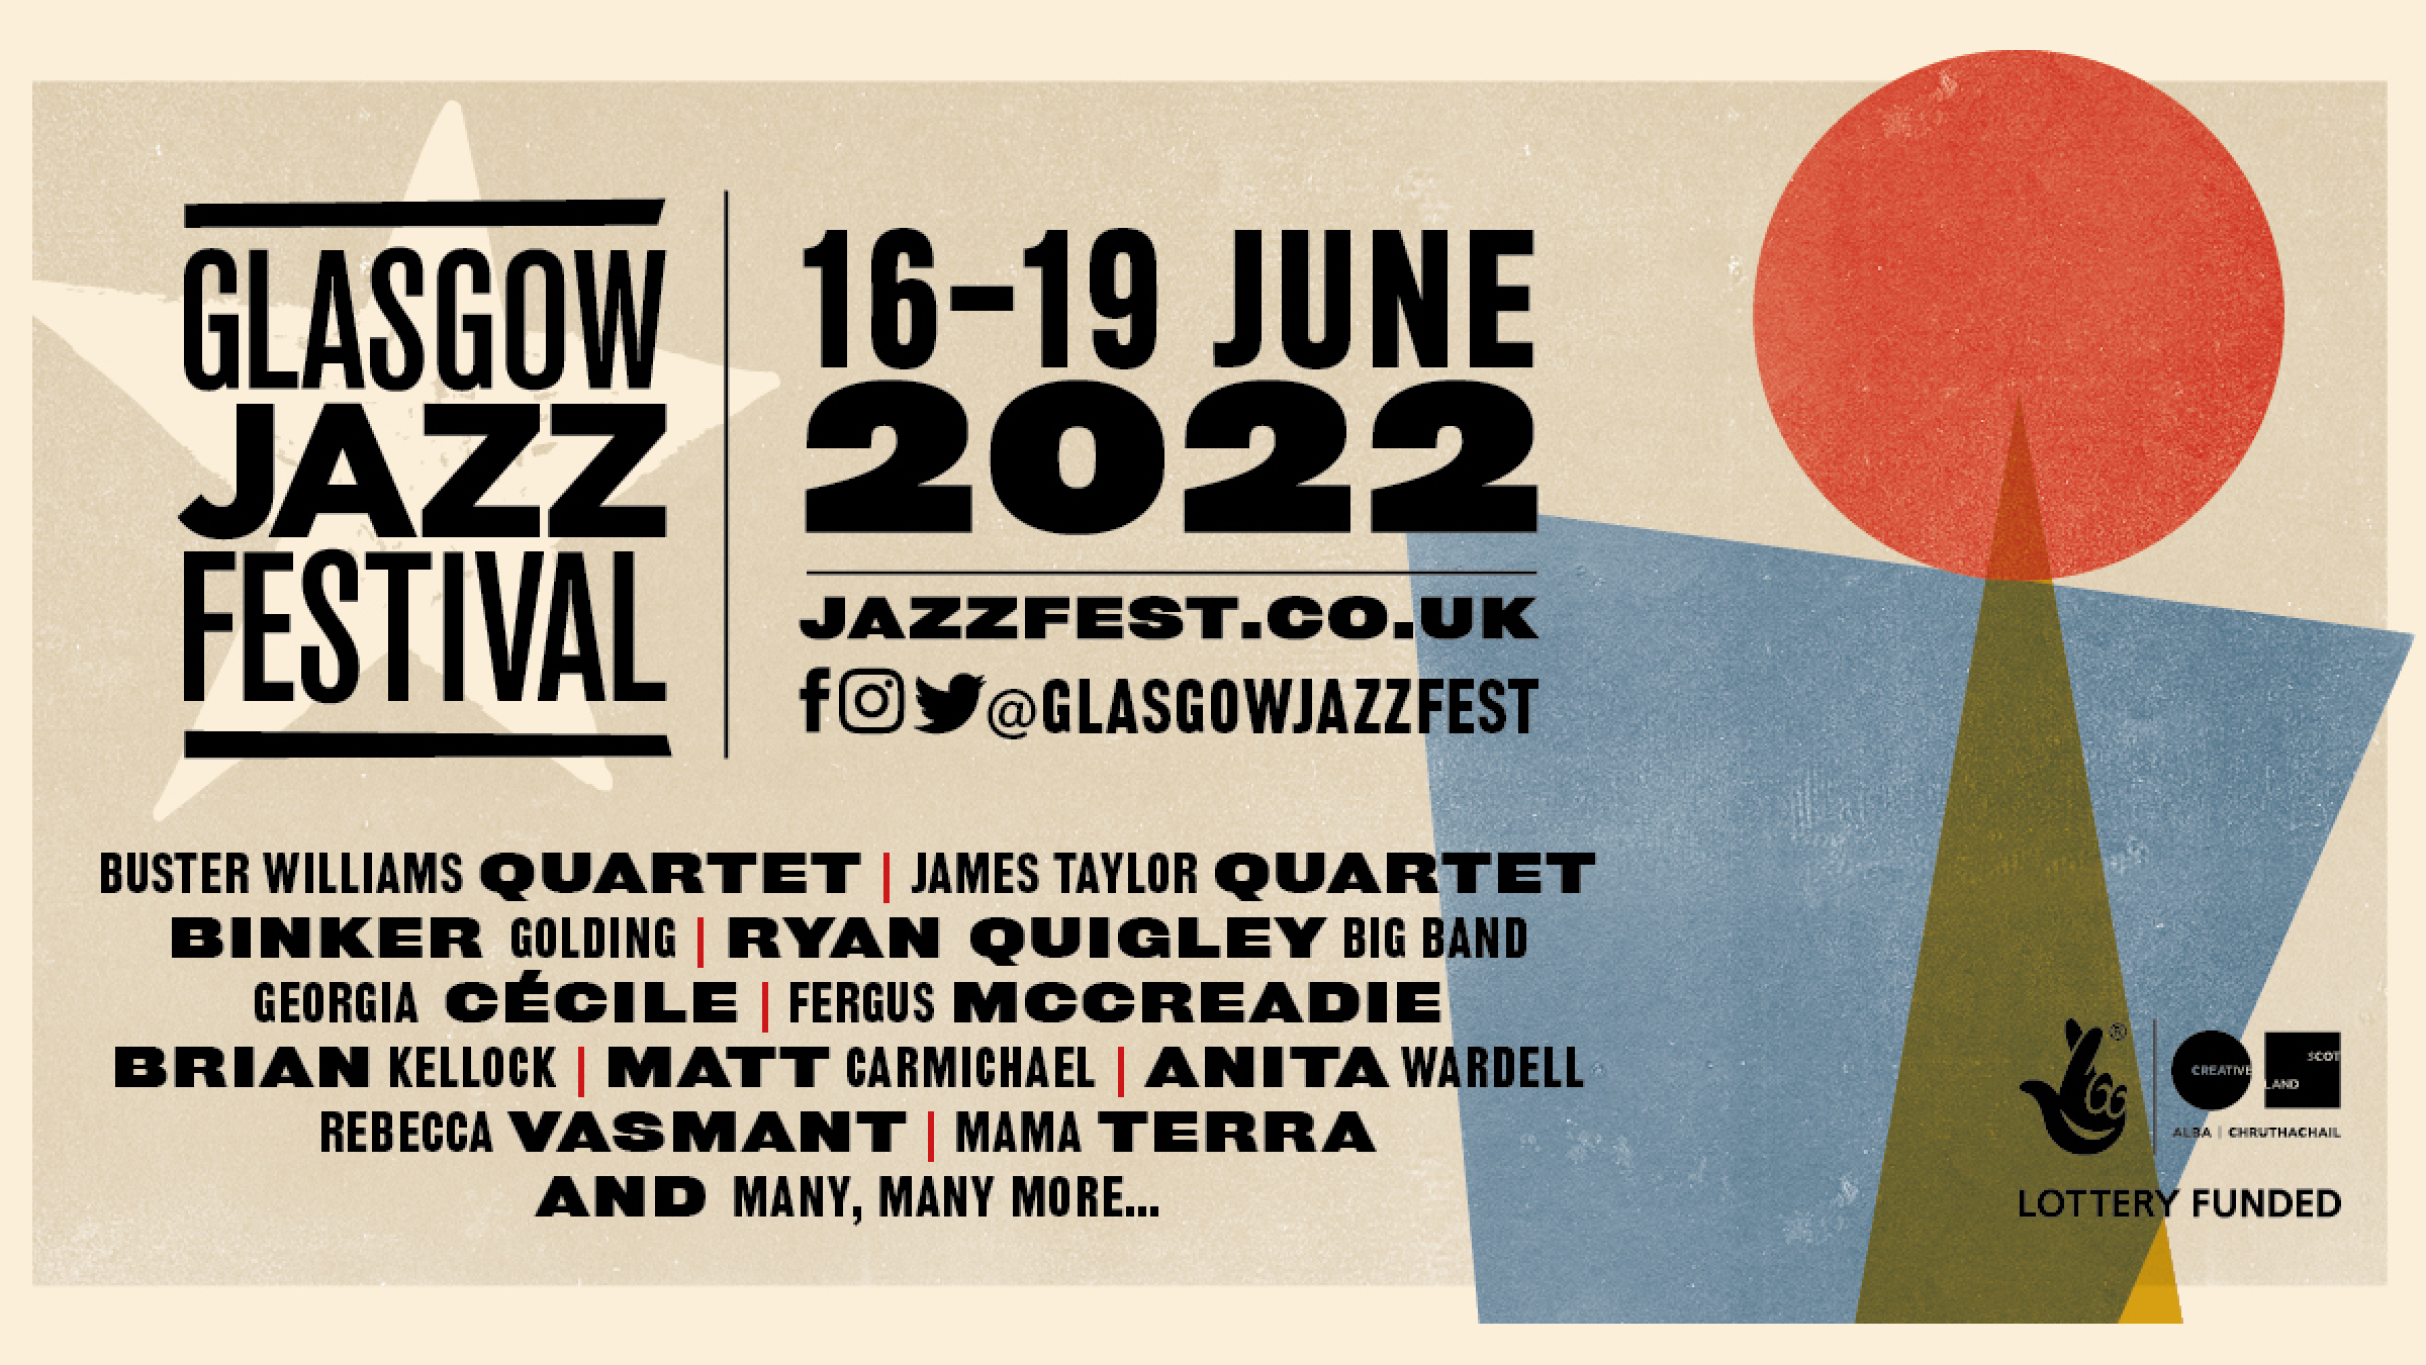 Glasgow Jazz Festival - Buster Williams Quartet Event Title Pic